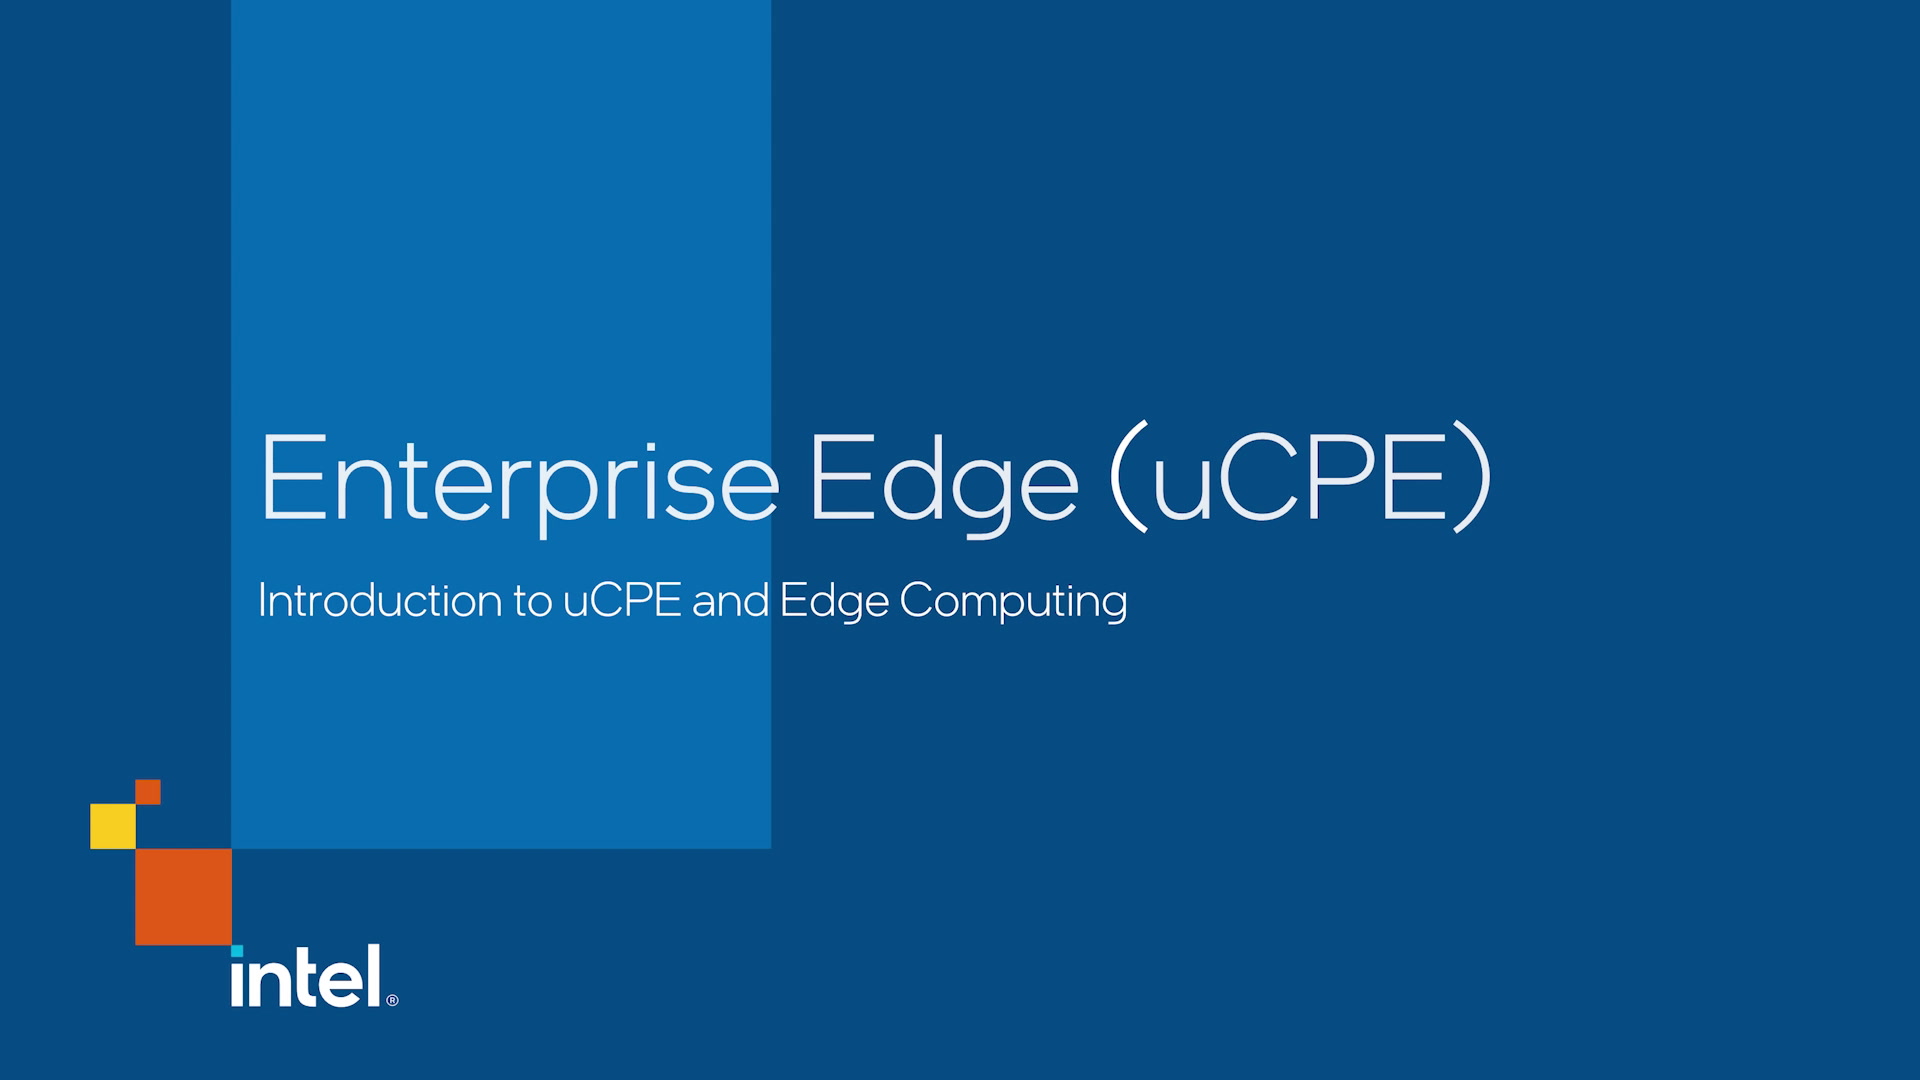 Enterprise Edge (uCPE): Introduction to uCPE and Edge Computing